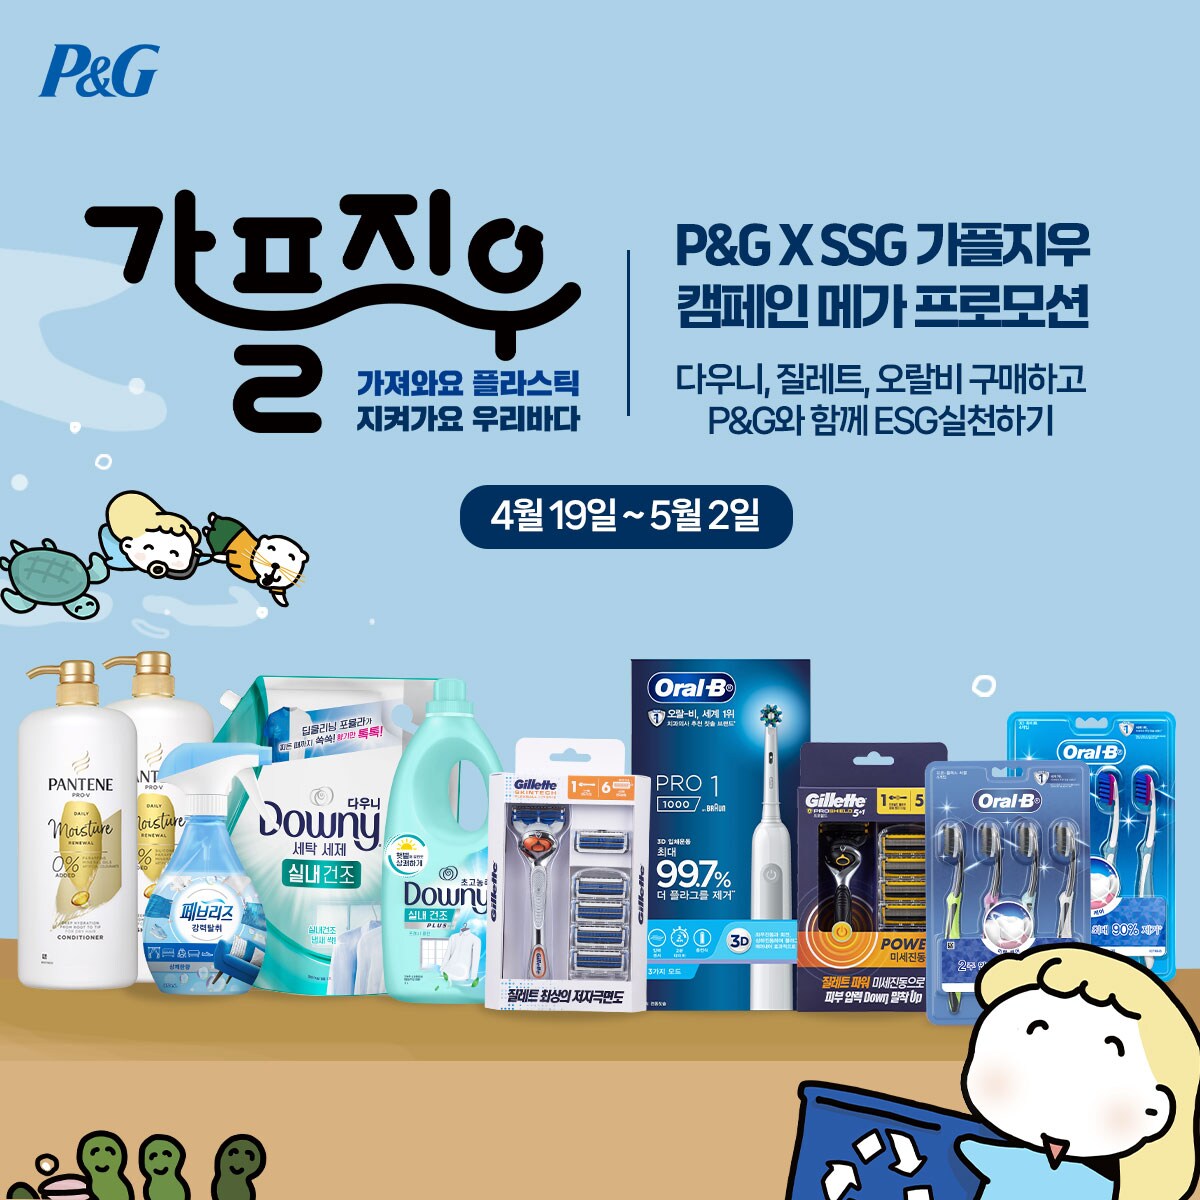 P&G x SSG 가플지우 캠페인 메가 프로모션